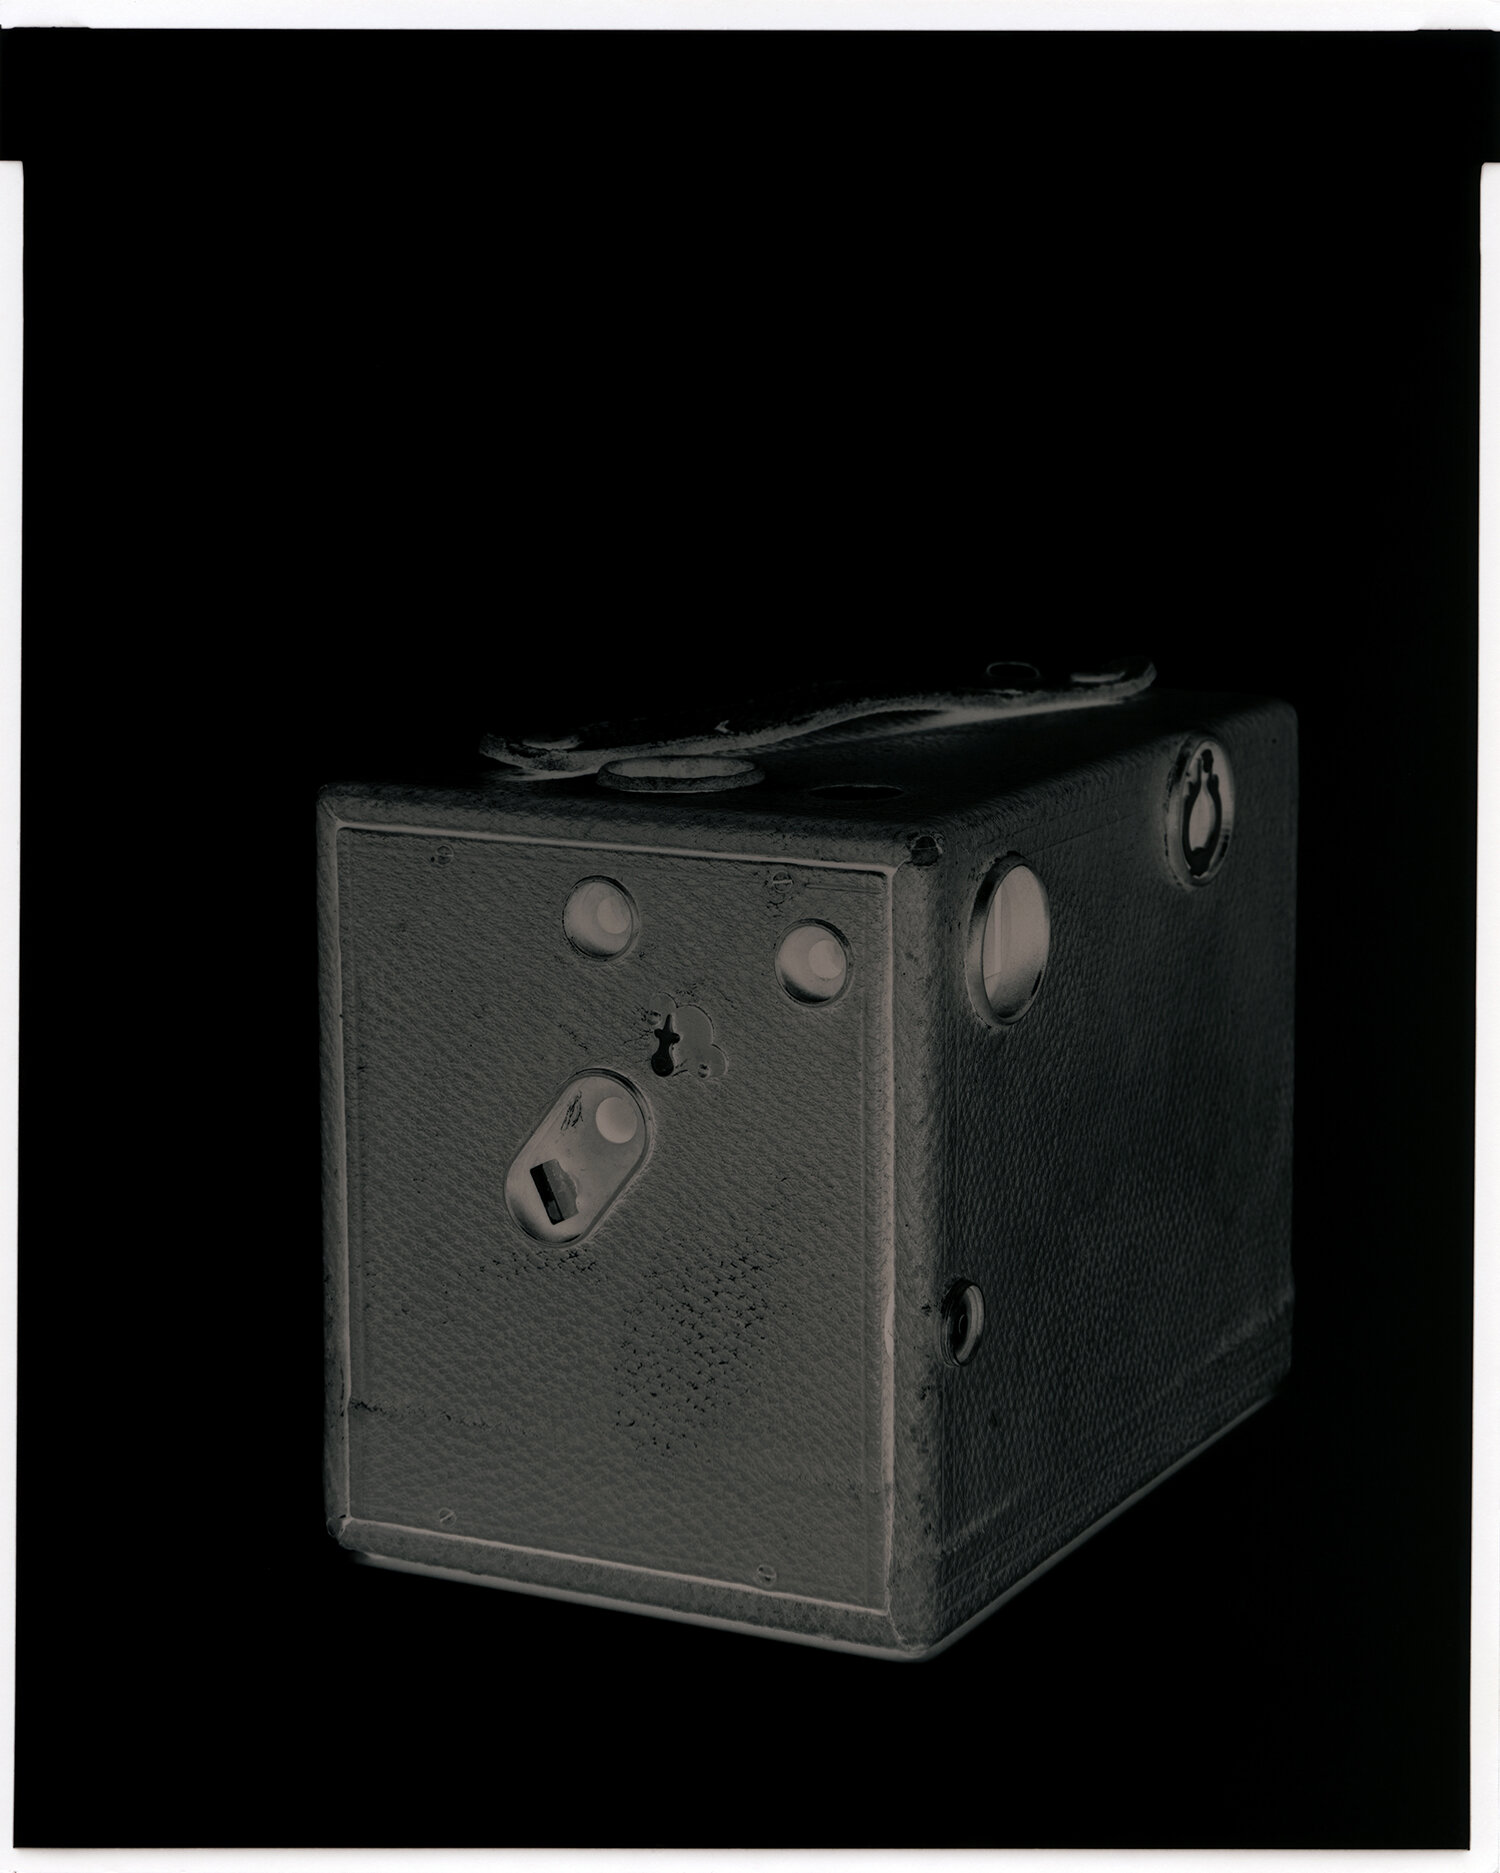 Eliot Porter's Kodak Box Camera, 2014